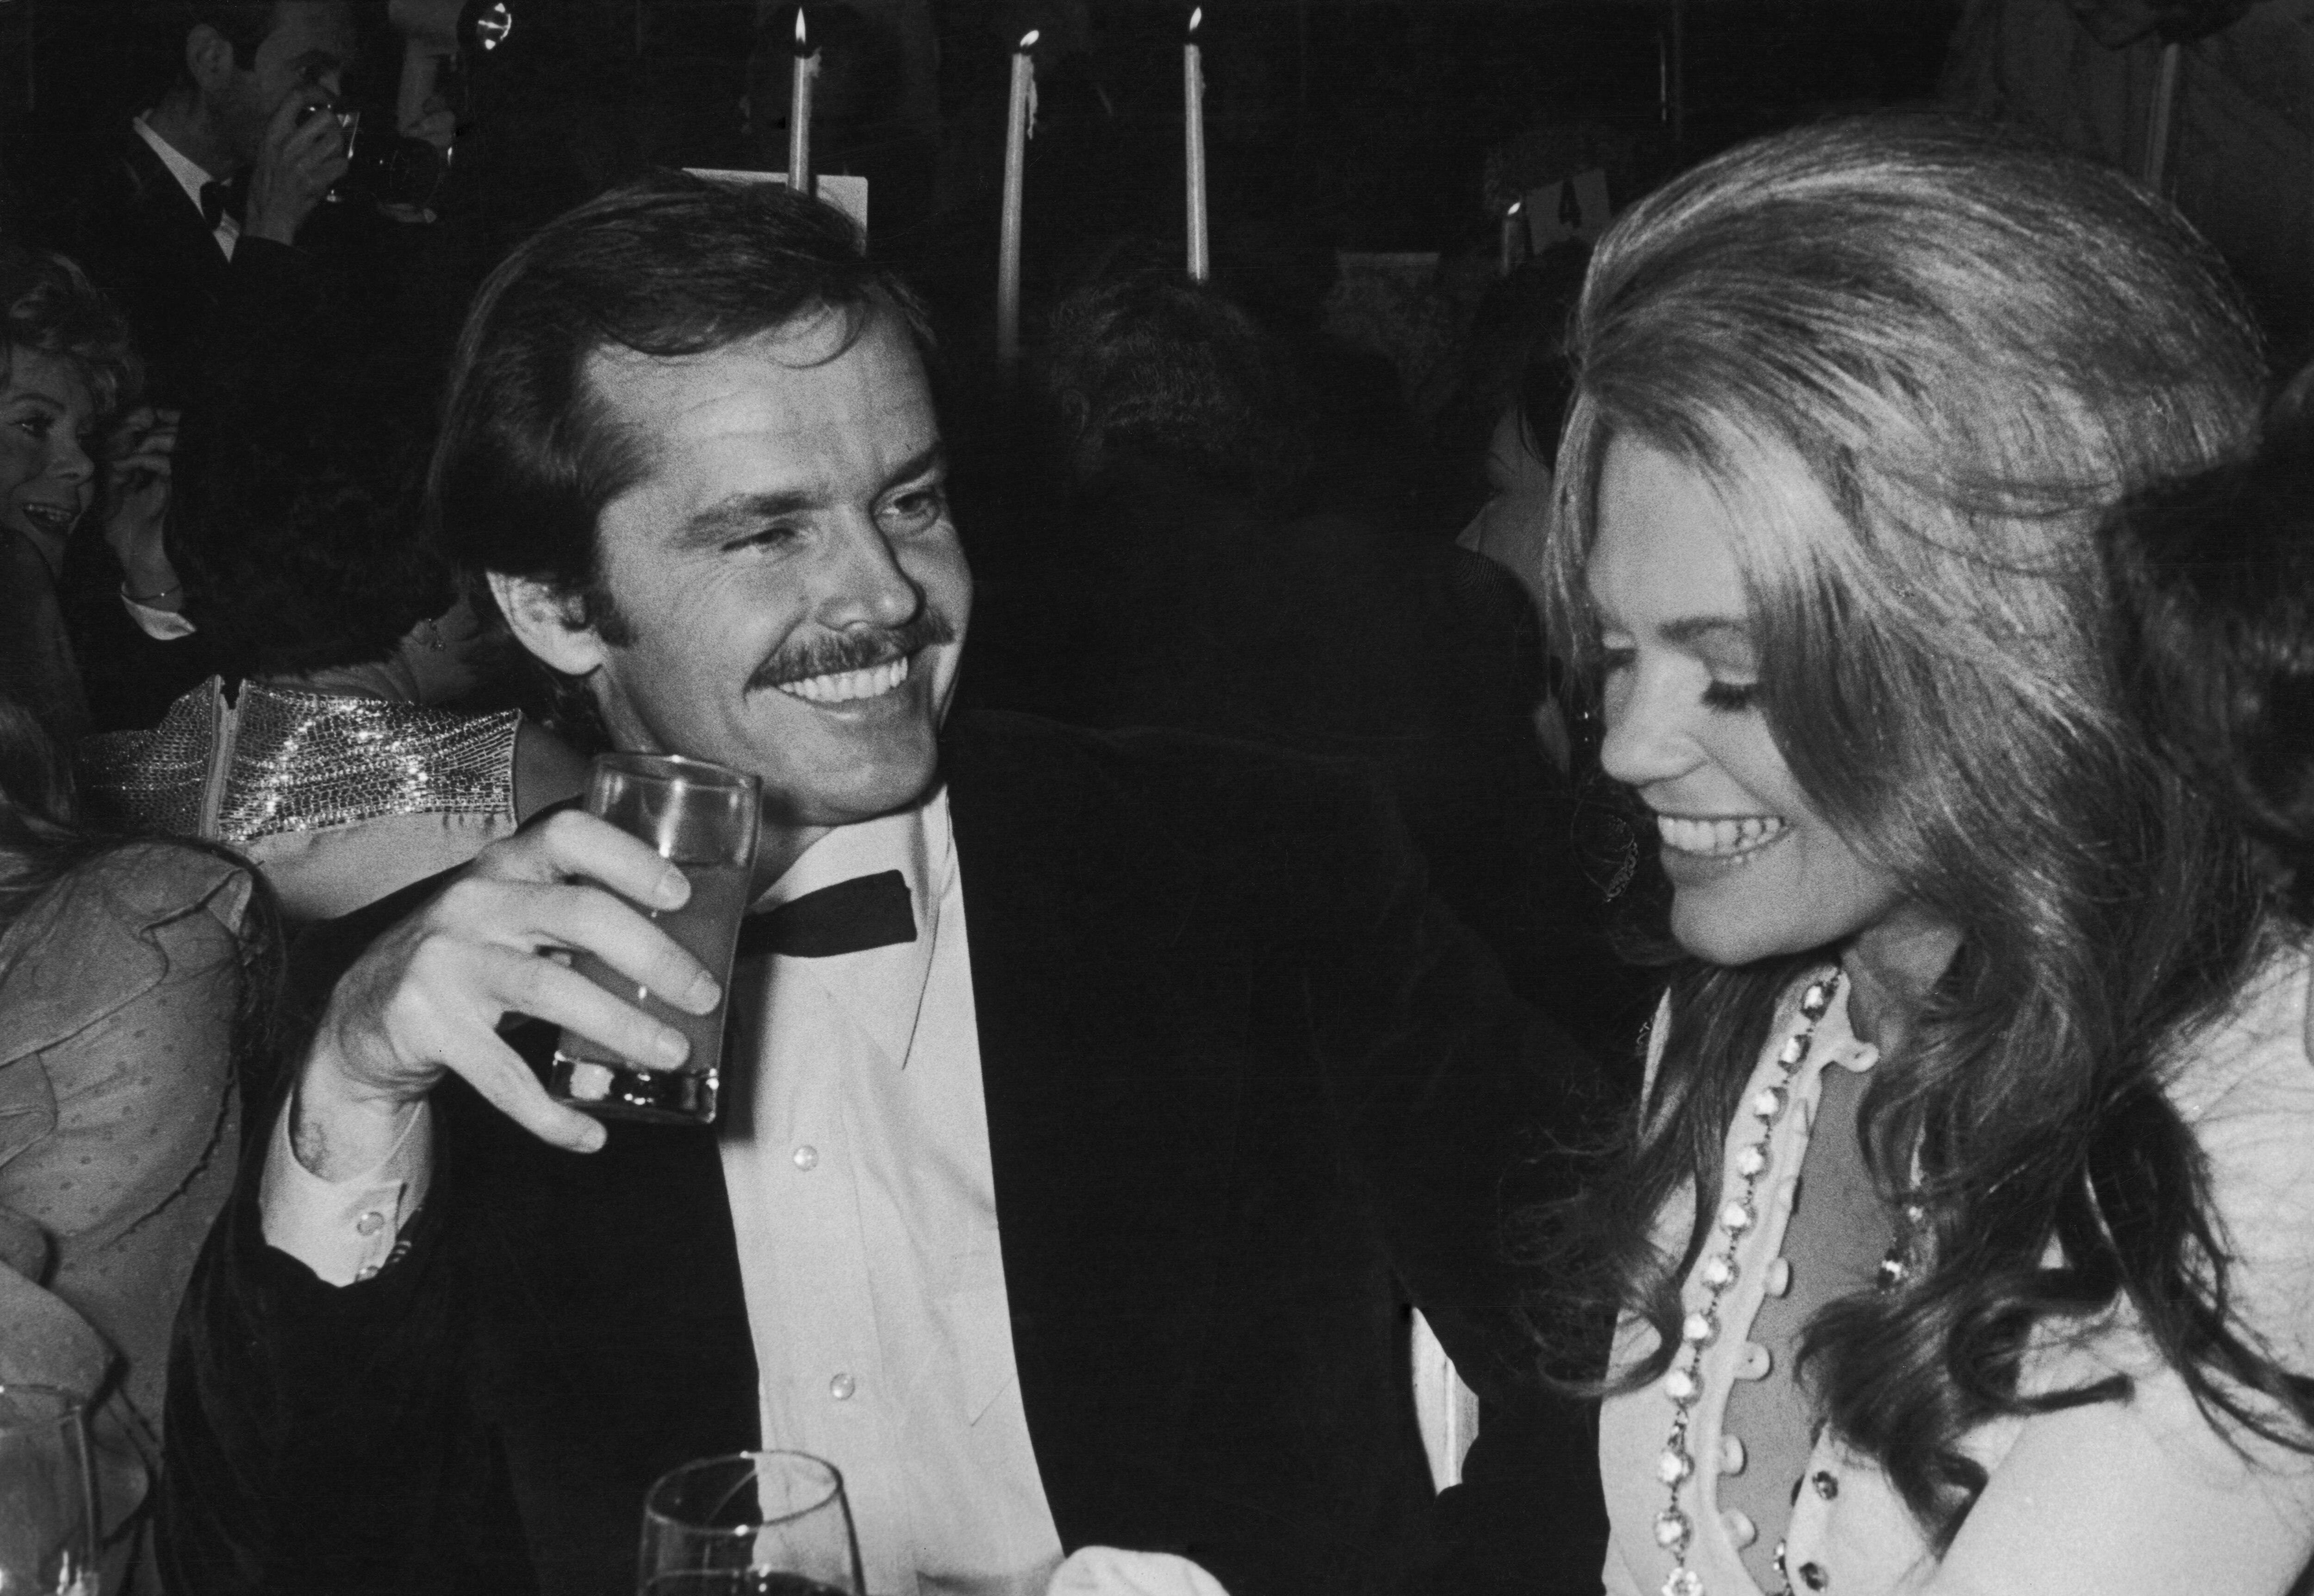 Jack Nicholson and actress Dyan Cannon enjoying themselves, 1975.jpg